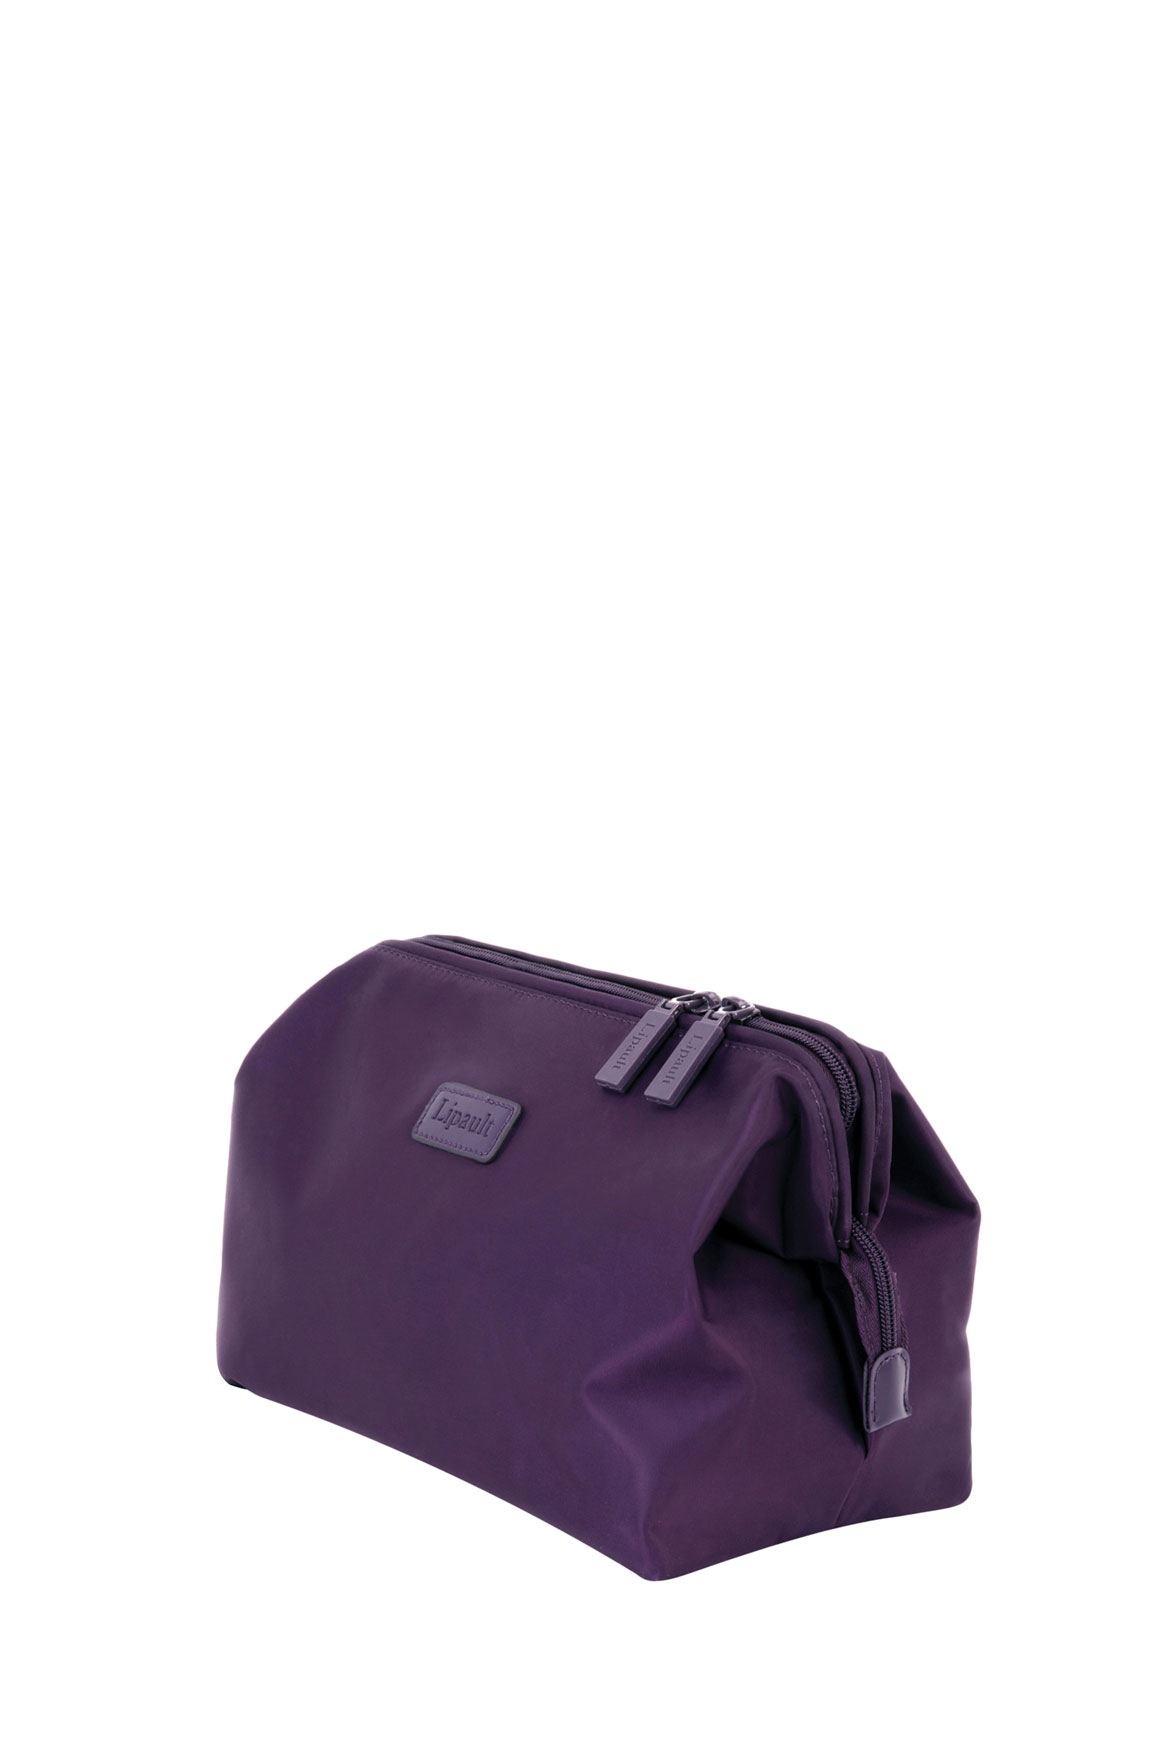 Lipault | Plume Toiletry Kit Purple | Myer Online